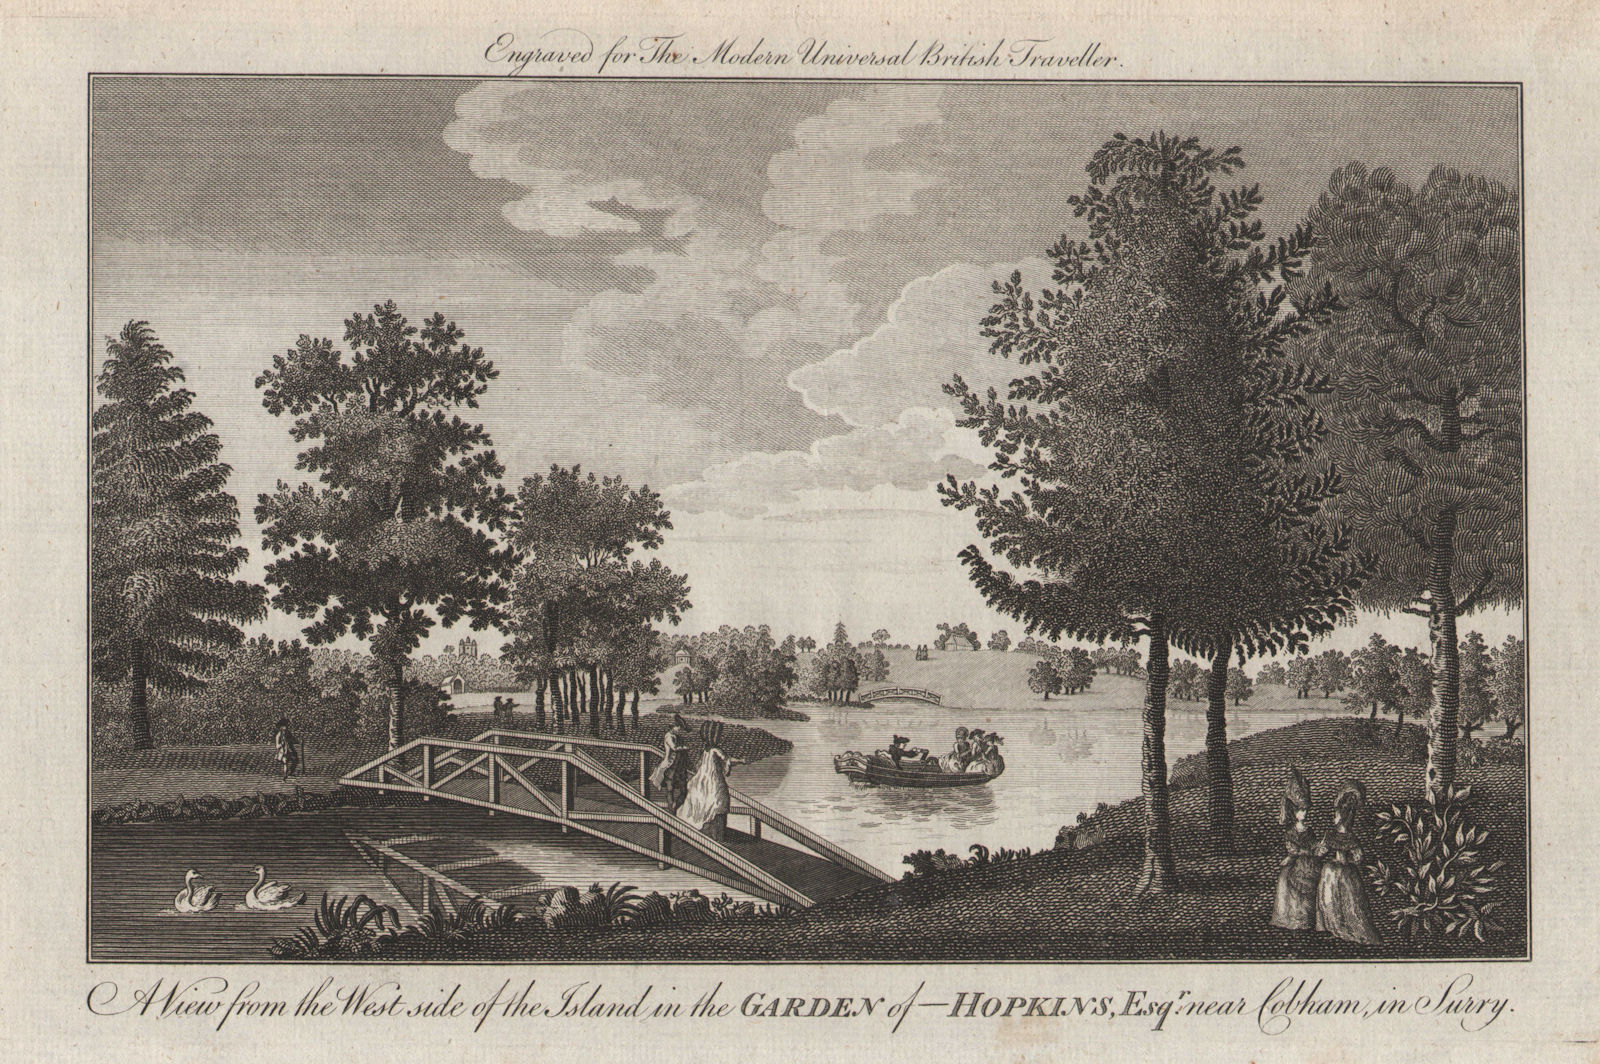 Painshill Park, Cobham, Surrey. Garden/island view. Hopkins. BURLINGTON 1779